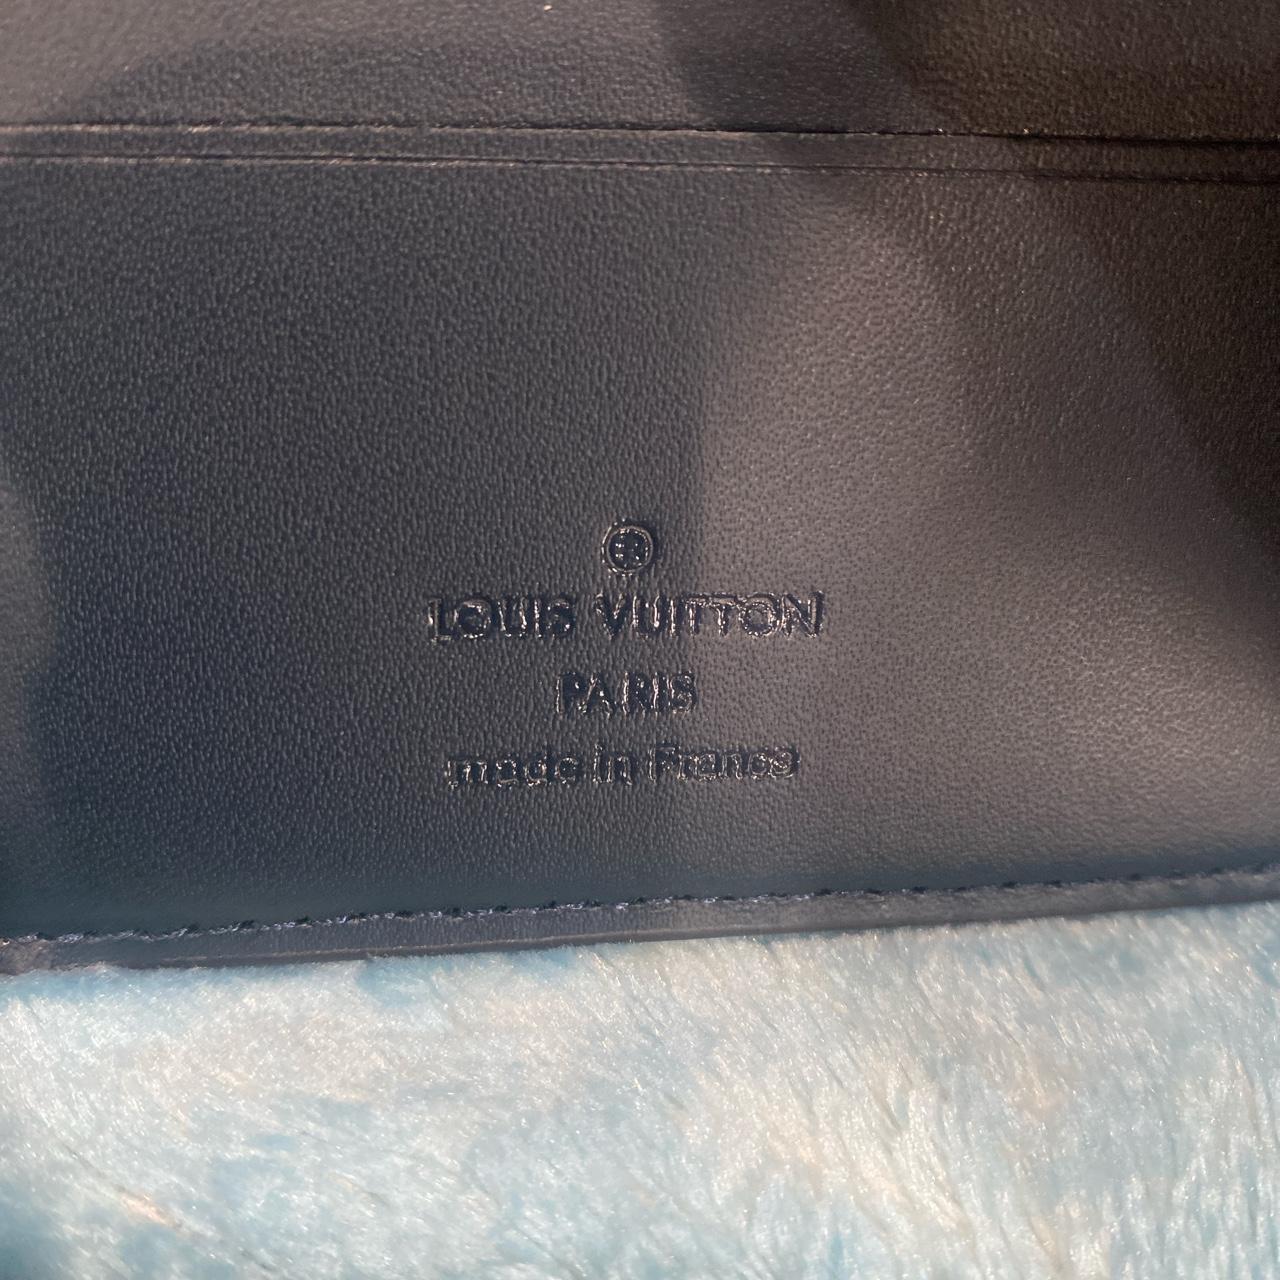 Louis Vuitton Blue Monogram Vernis Sarah Wallet - Depop